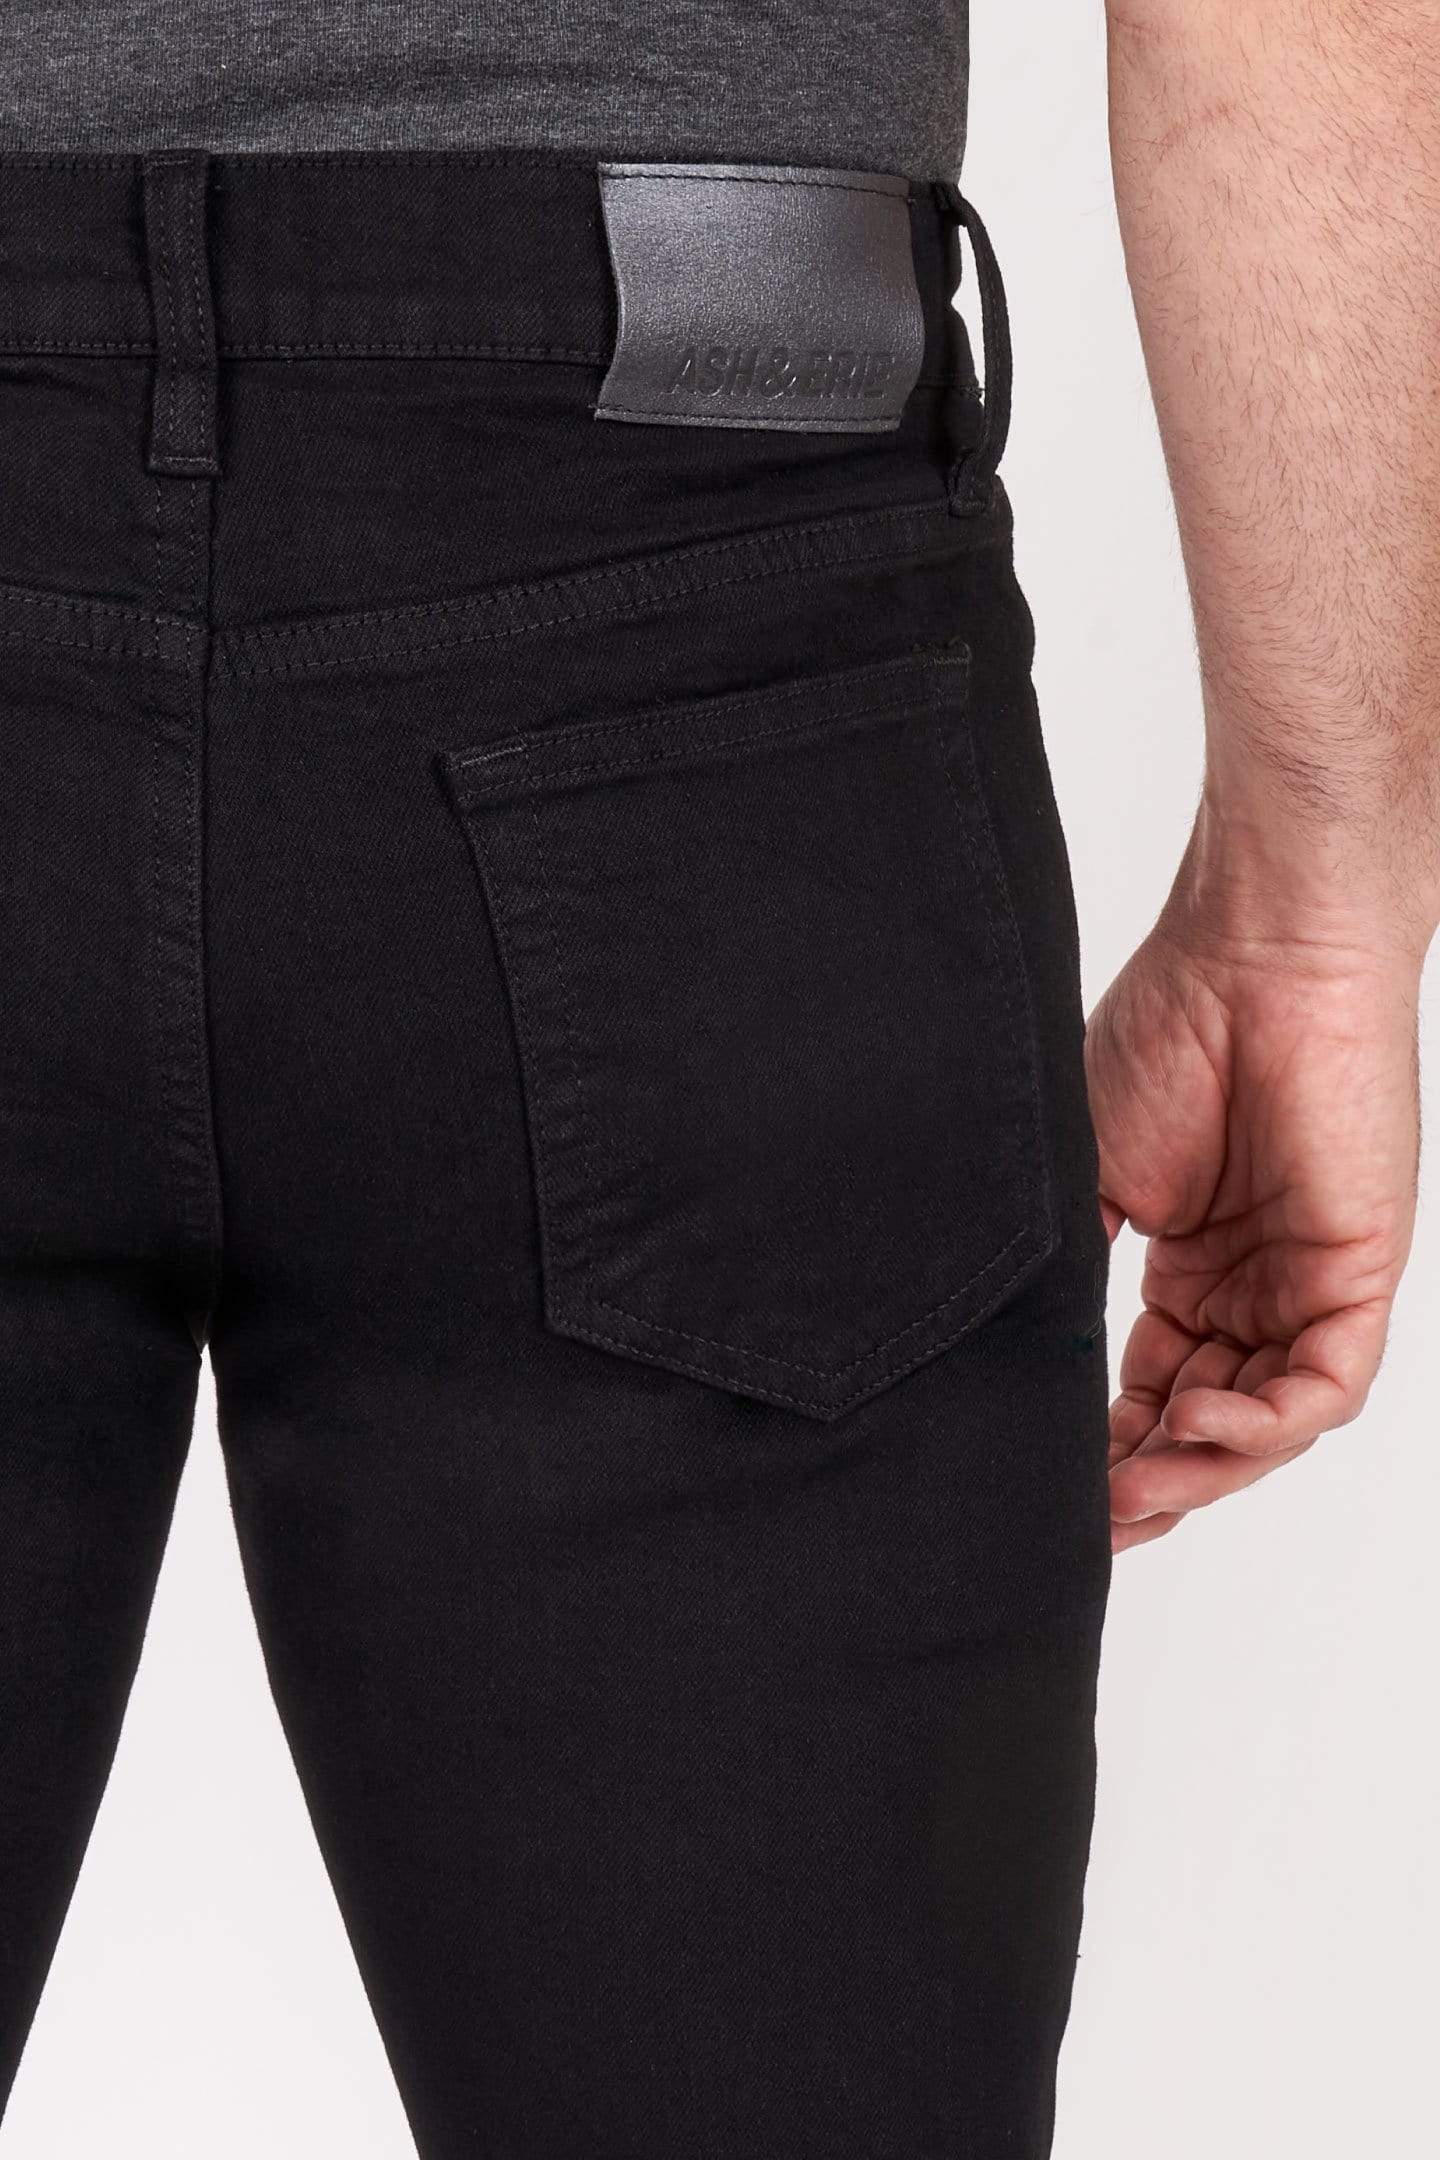 Essentials for Short Men | Clothes for Short Guys | Ash & Erie